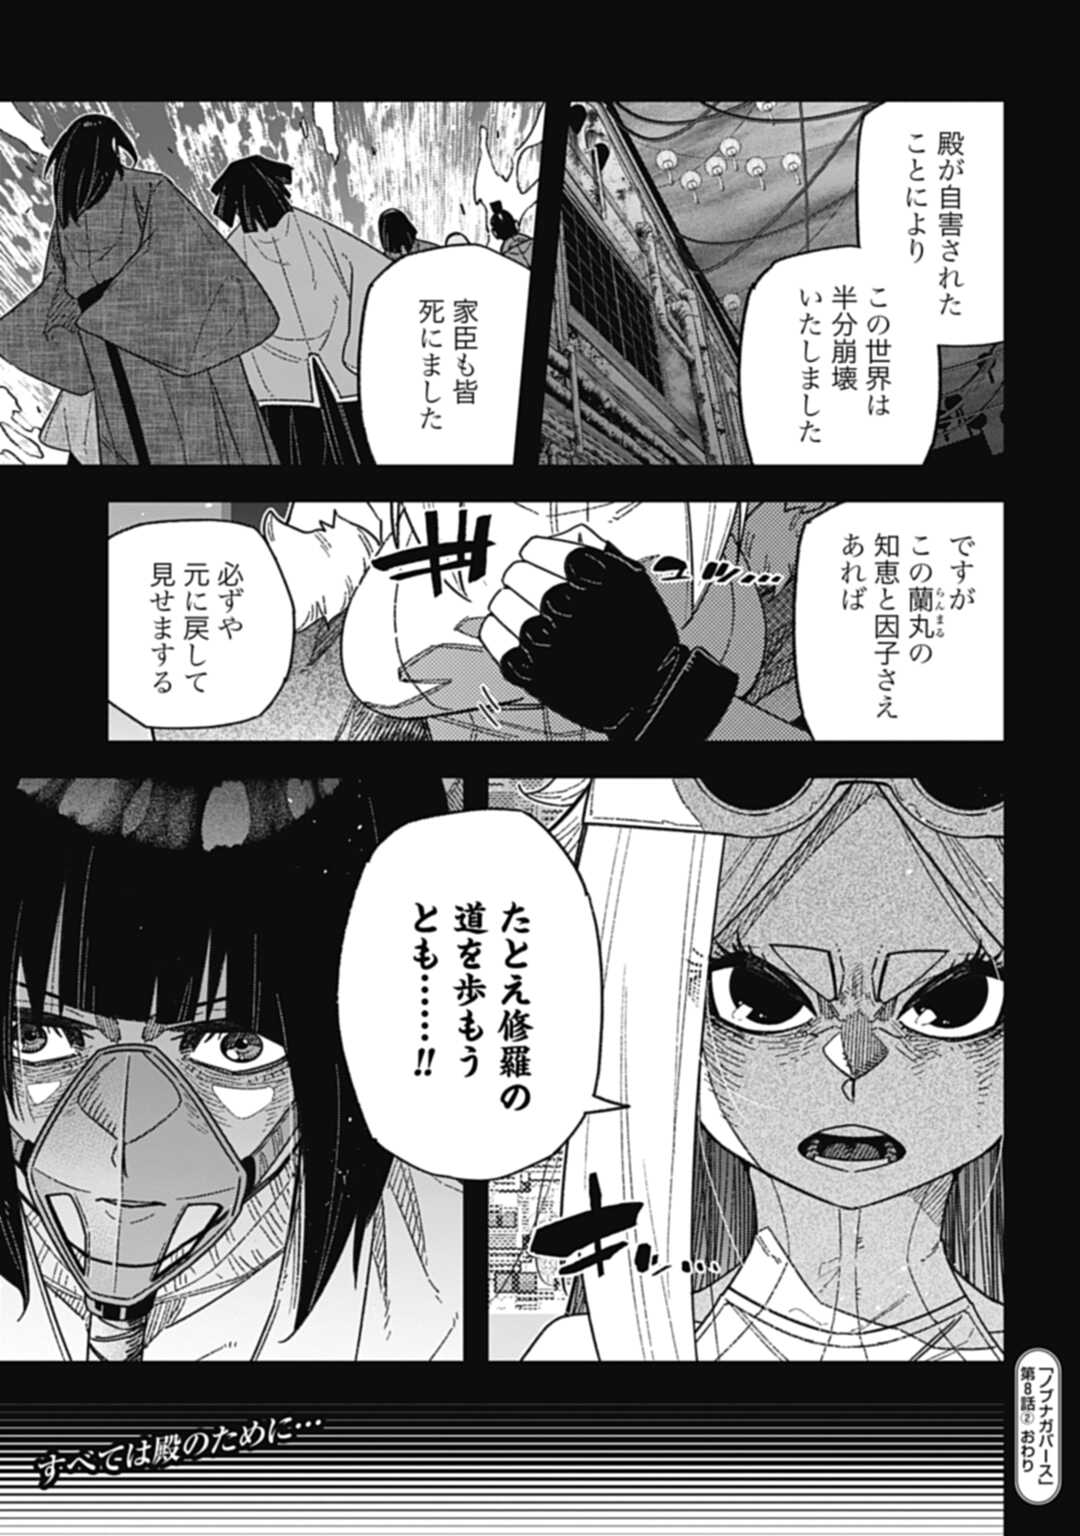 Nobunaga Multiverse - Chapter 8.2 - Page 12